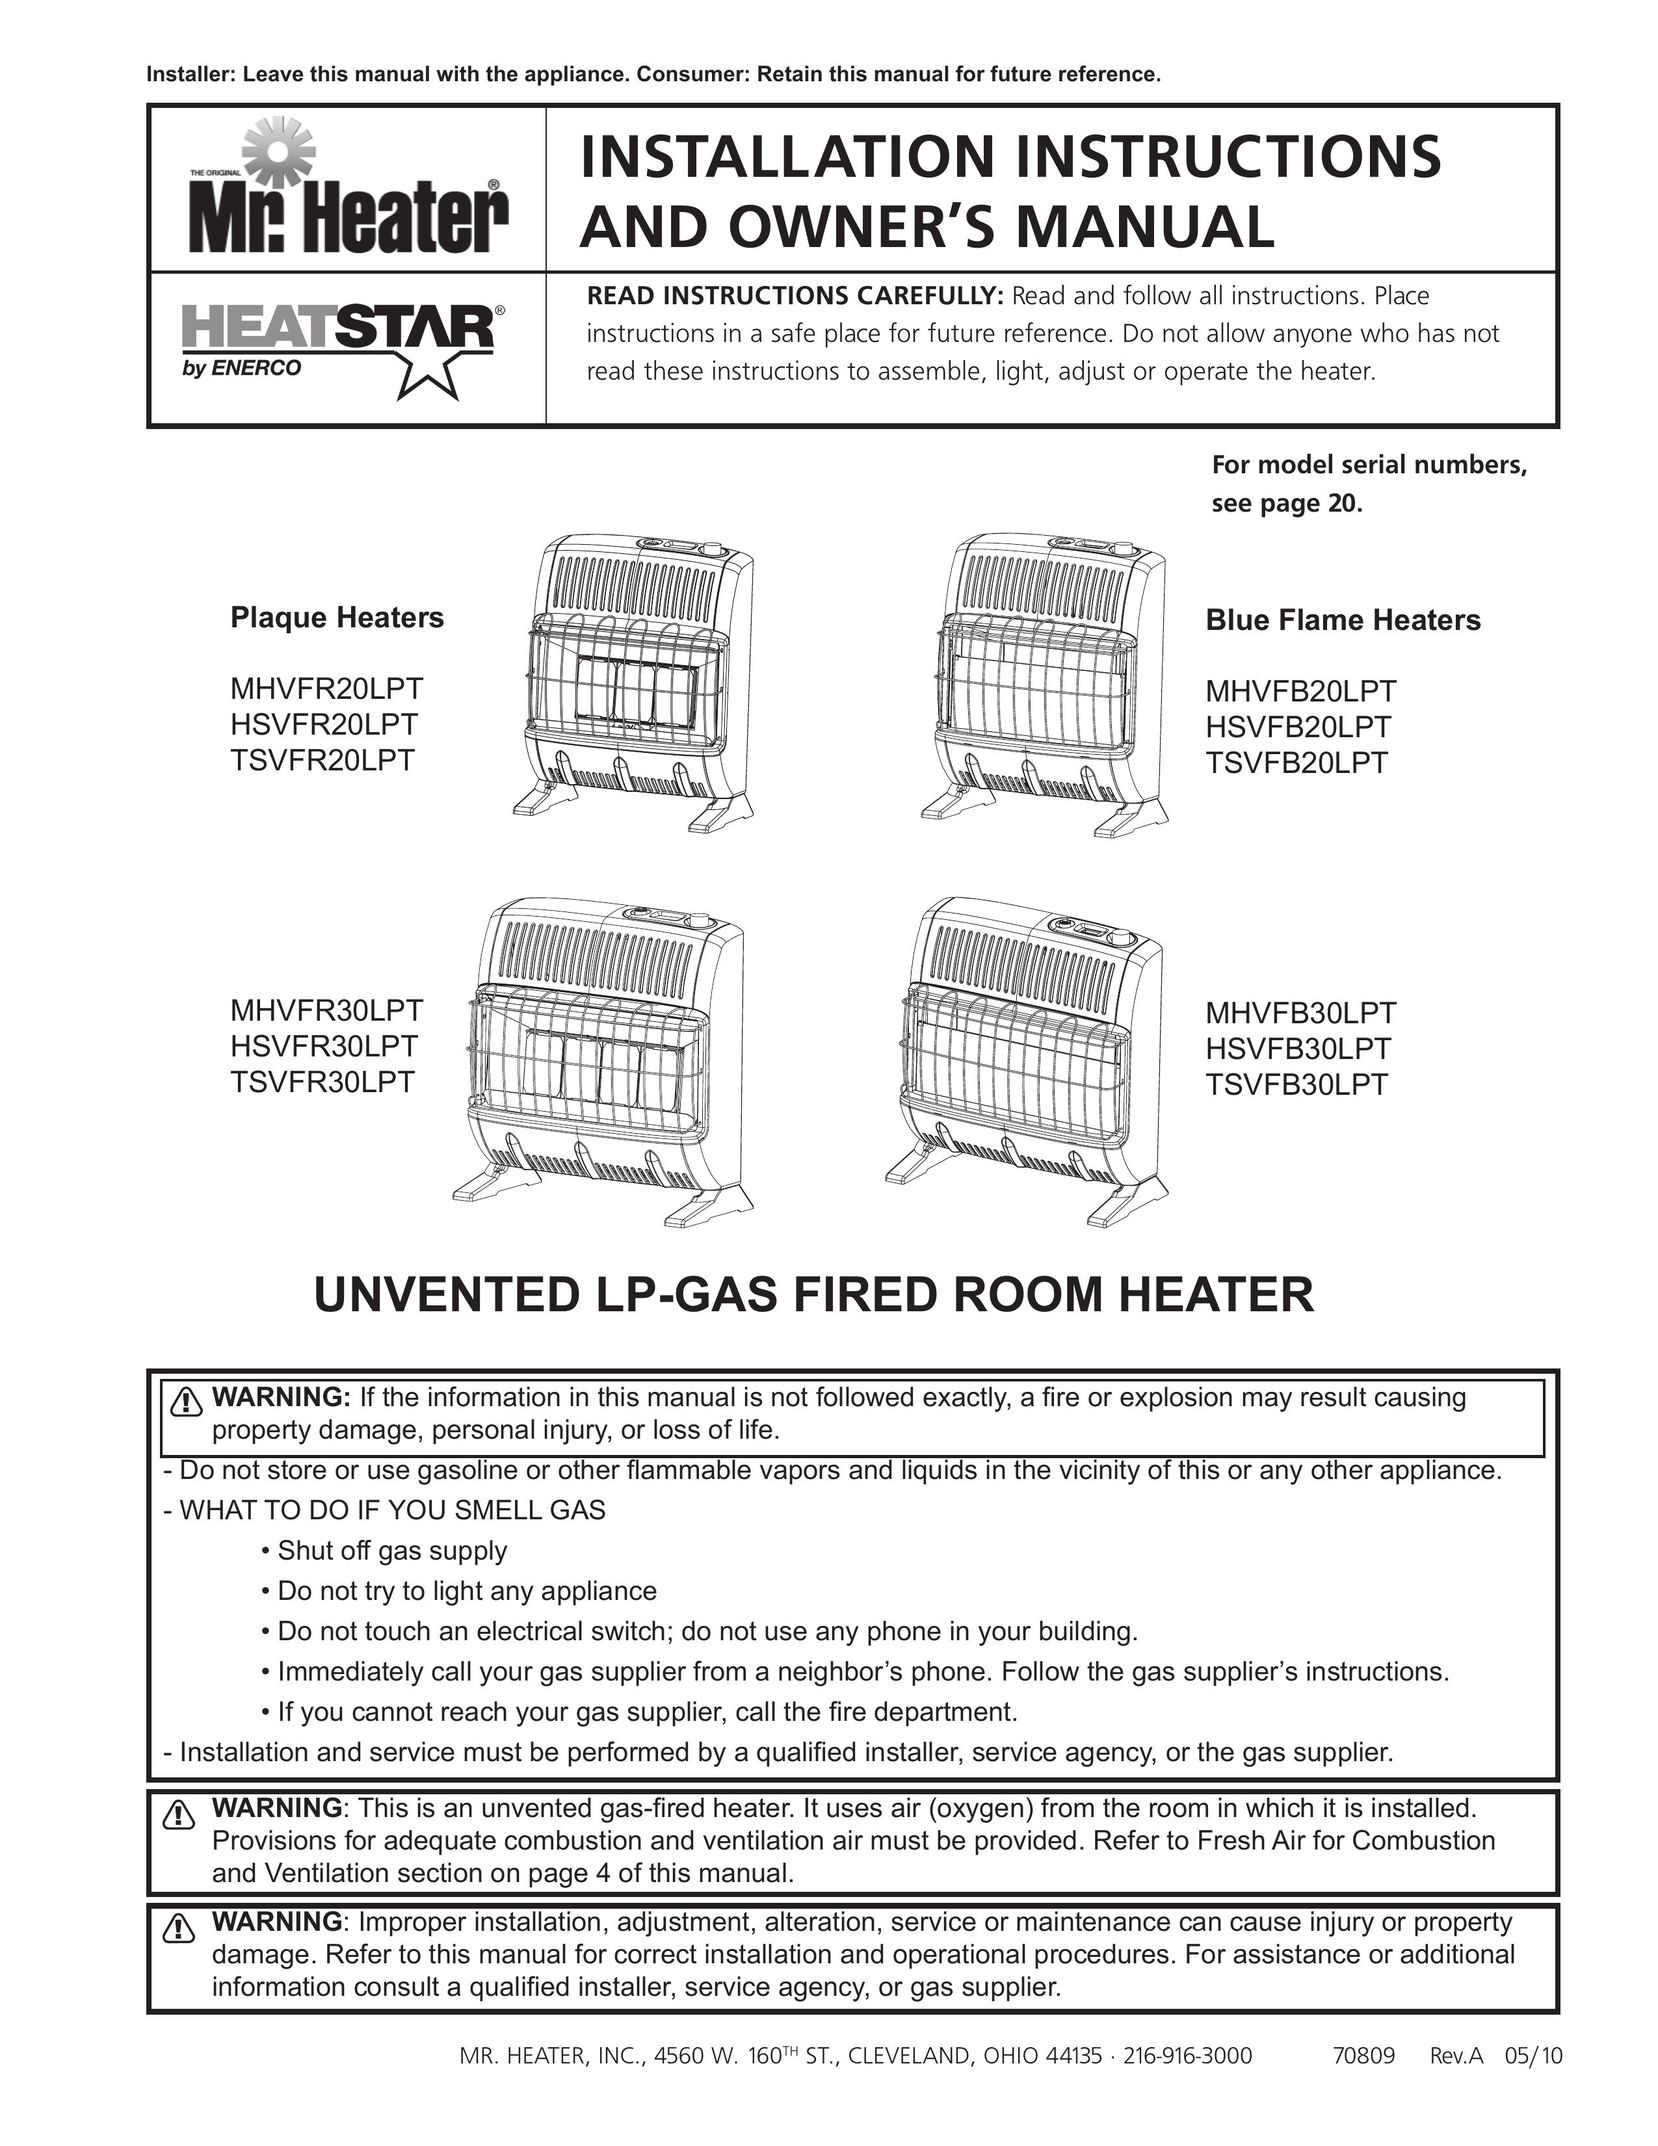 Enerco MHVFB20LPT Gas Heater User Manual